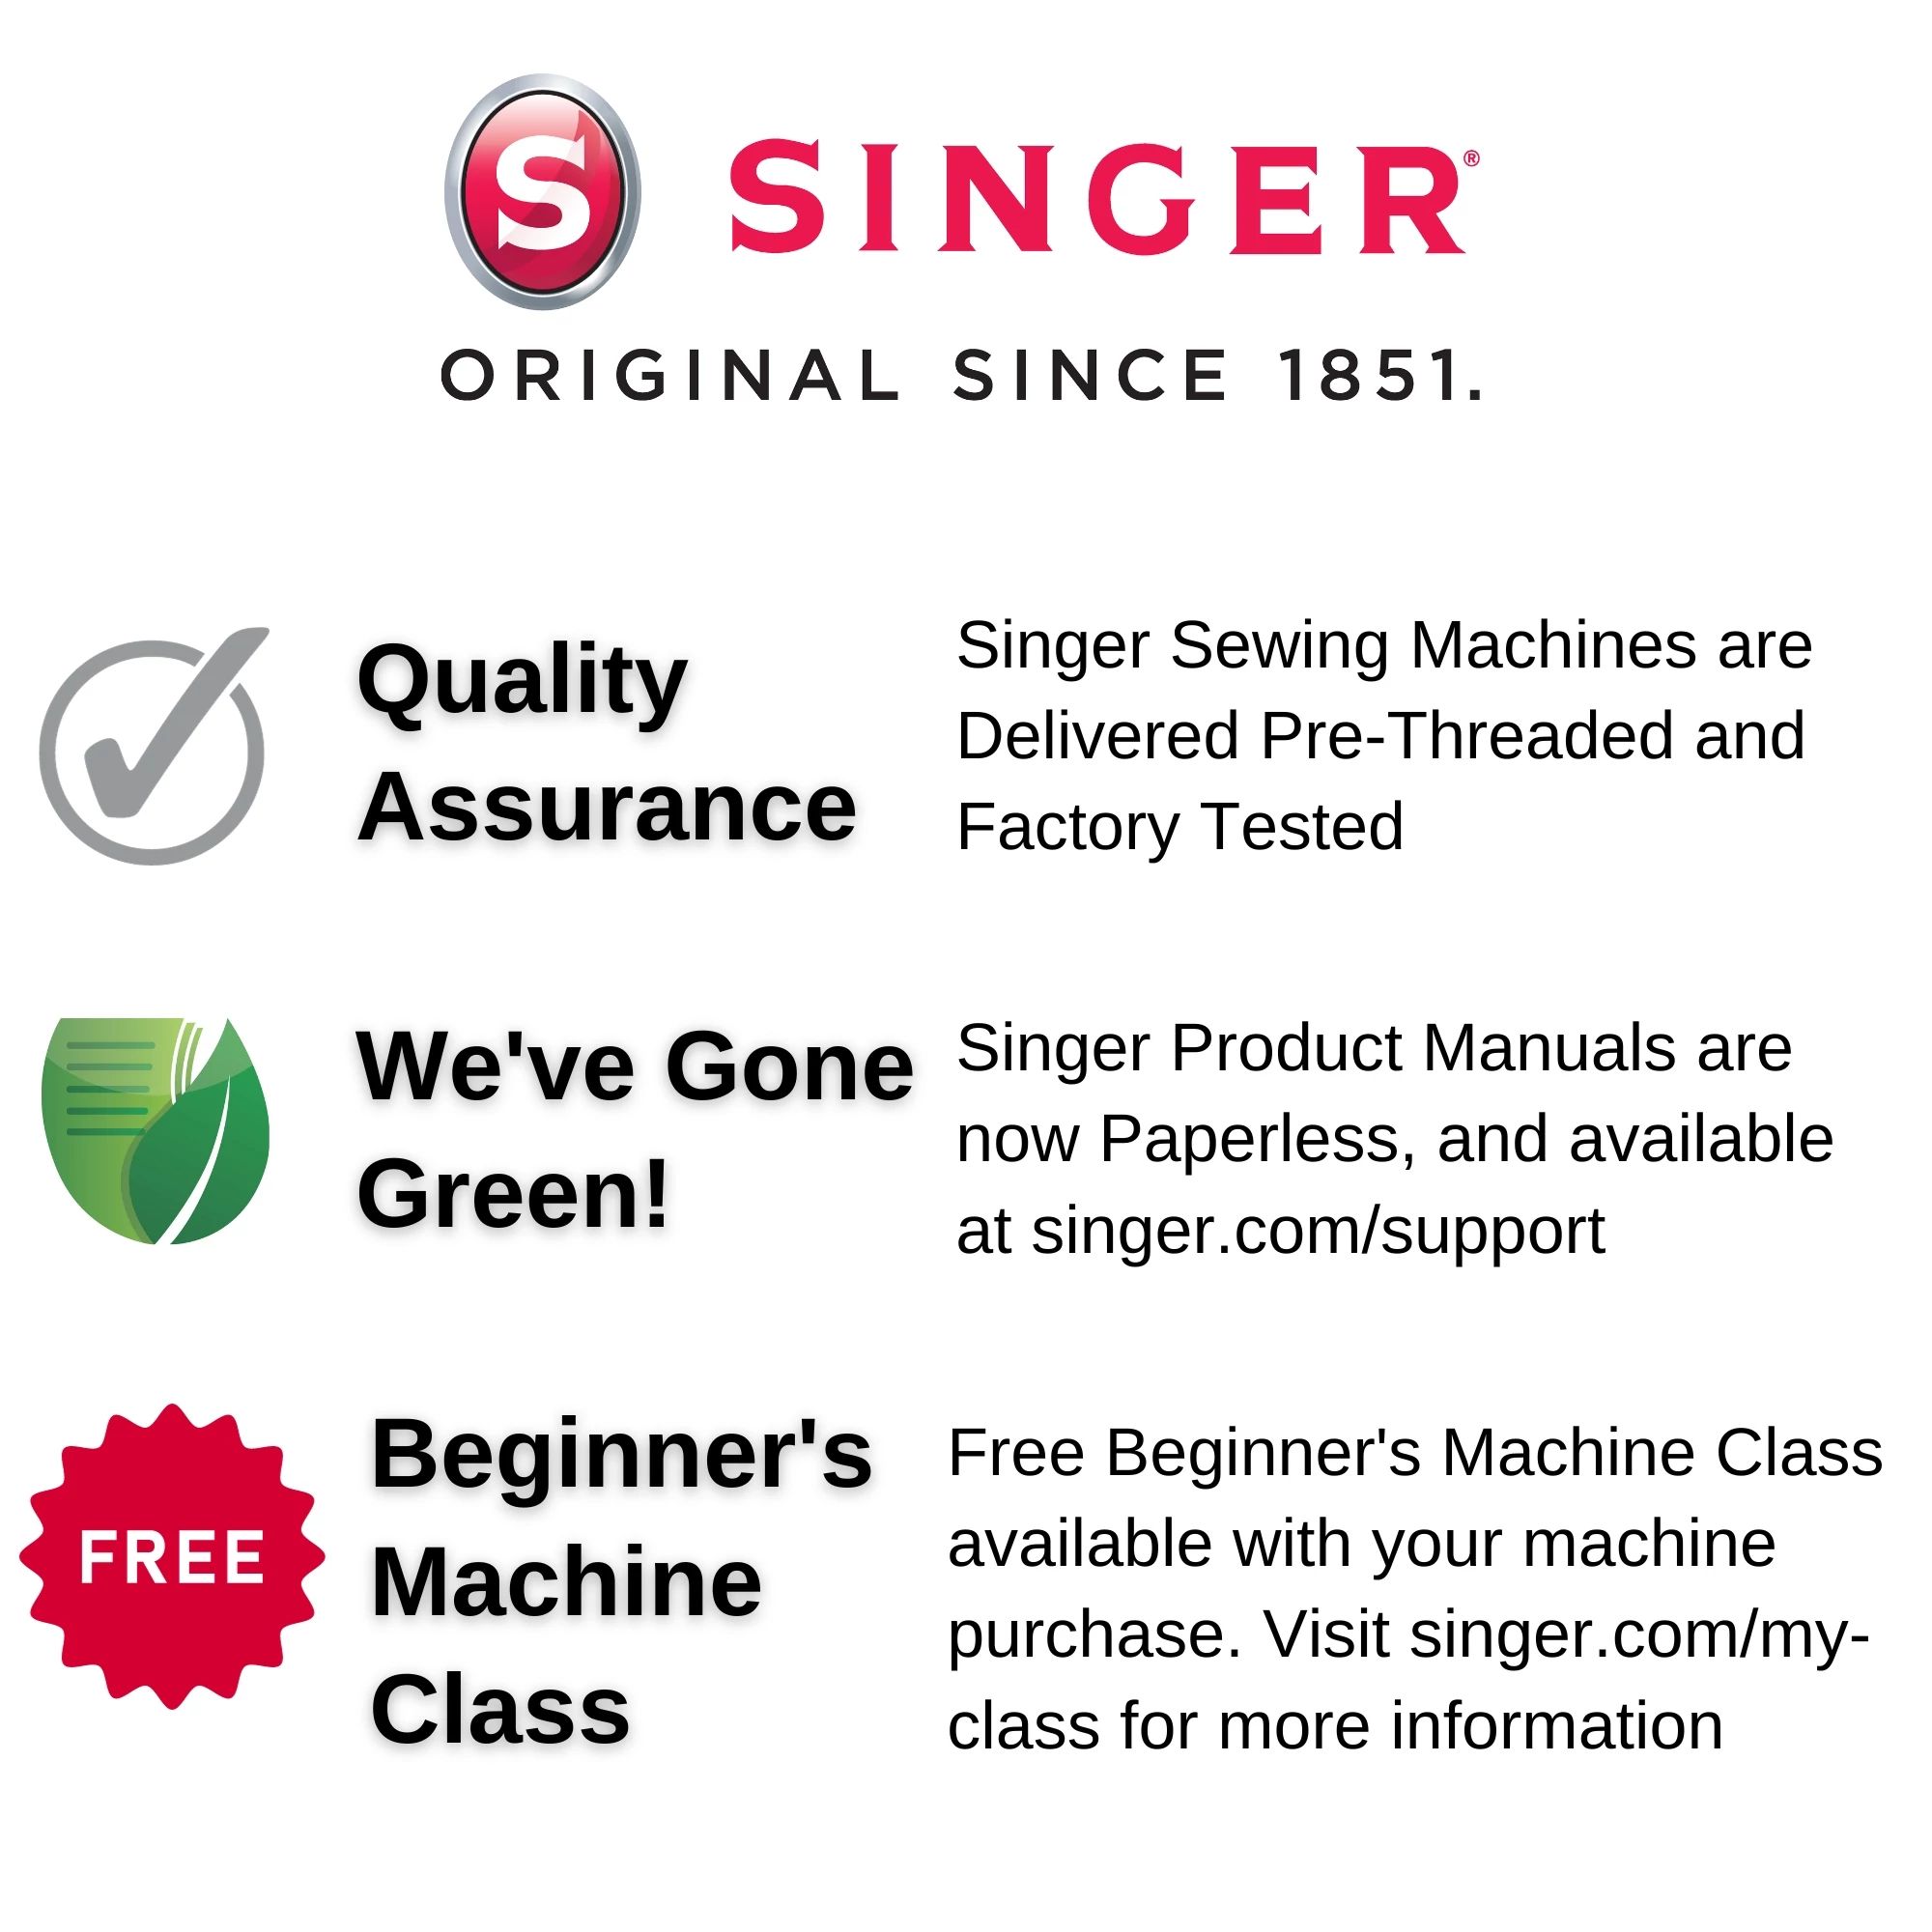 Singer 9960 Quantum Stylist™ Sewing Machine New Open Box free ship USA